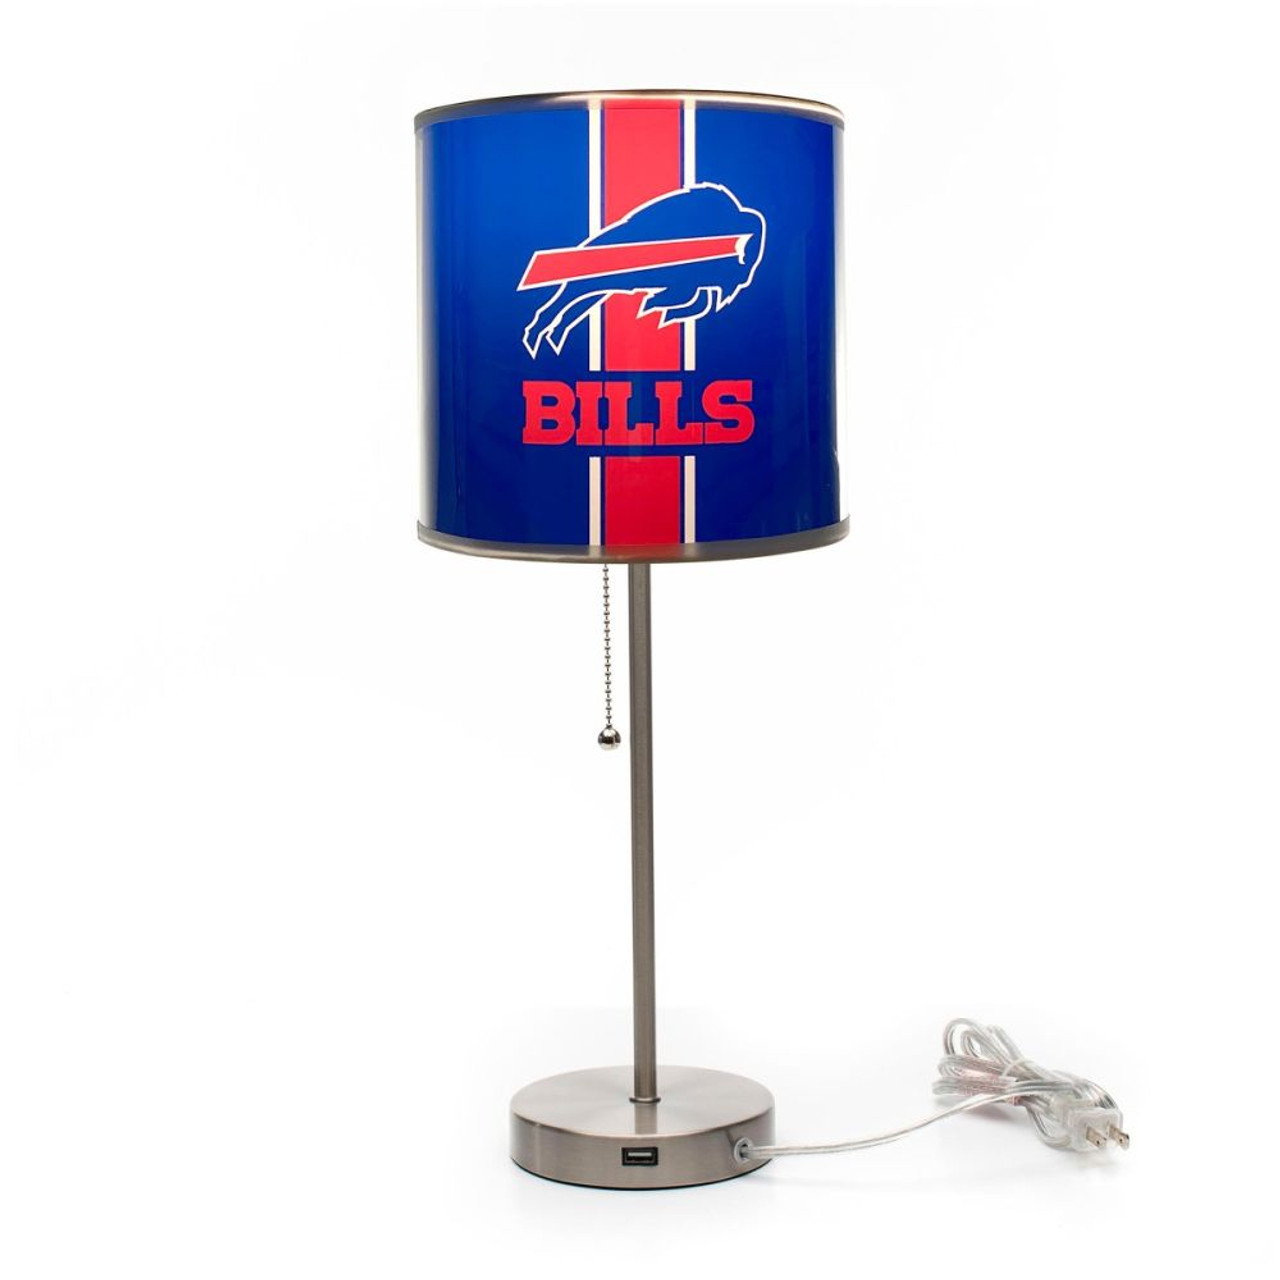 Buffalo, Buf, Bills, 19", Tall, Chrome, Table, Desk, Lamp, 609-1021, Imperial, NFL